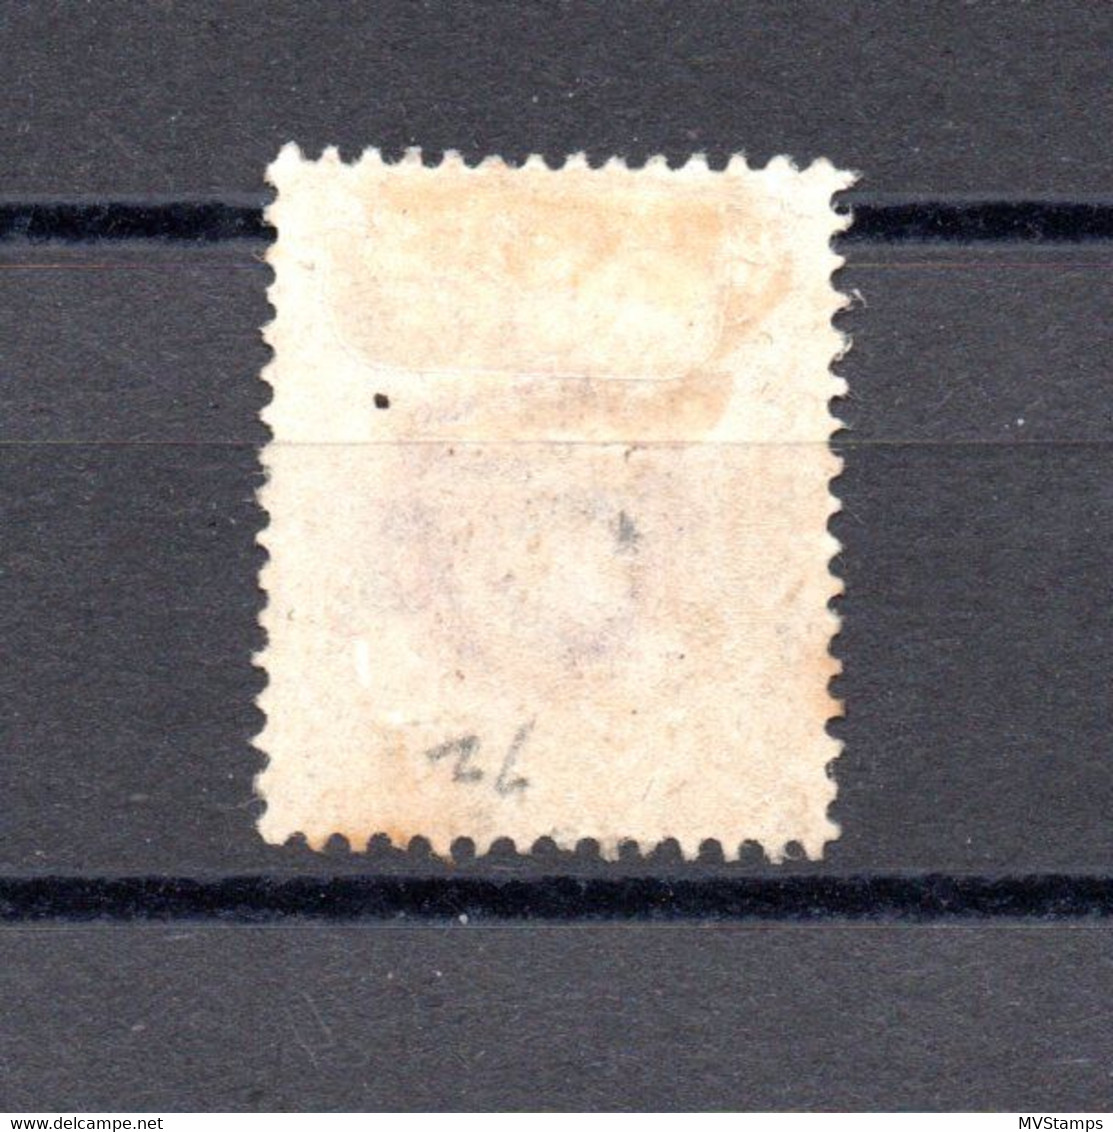 Hong Kong 1903 Old Def. Edward Stamp (Michel 71) Nice MLH - Unused Stamps